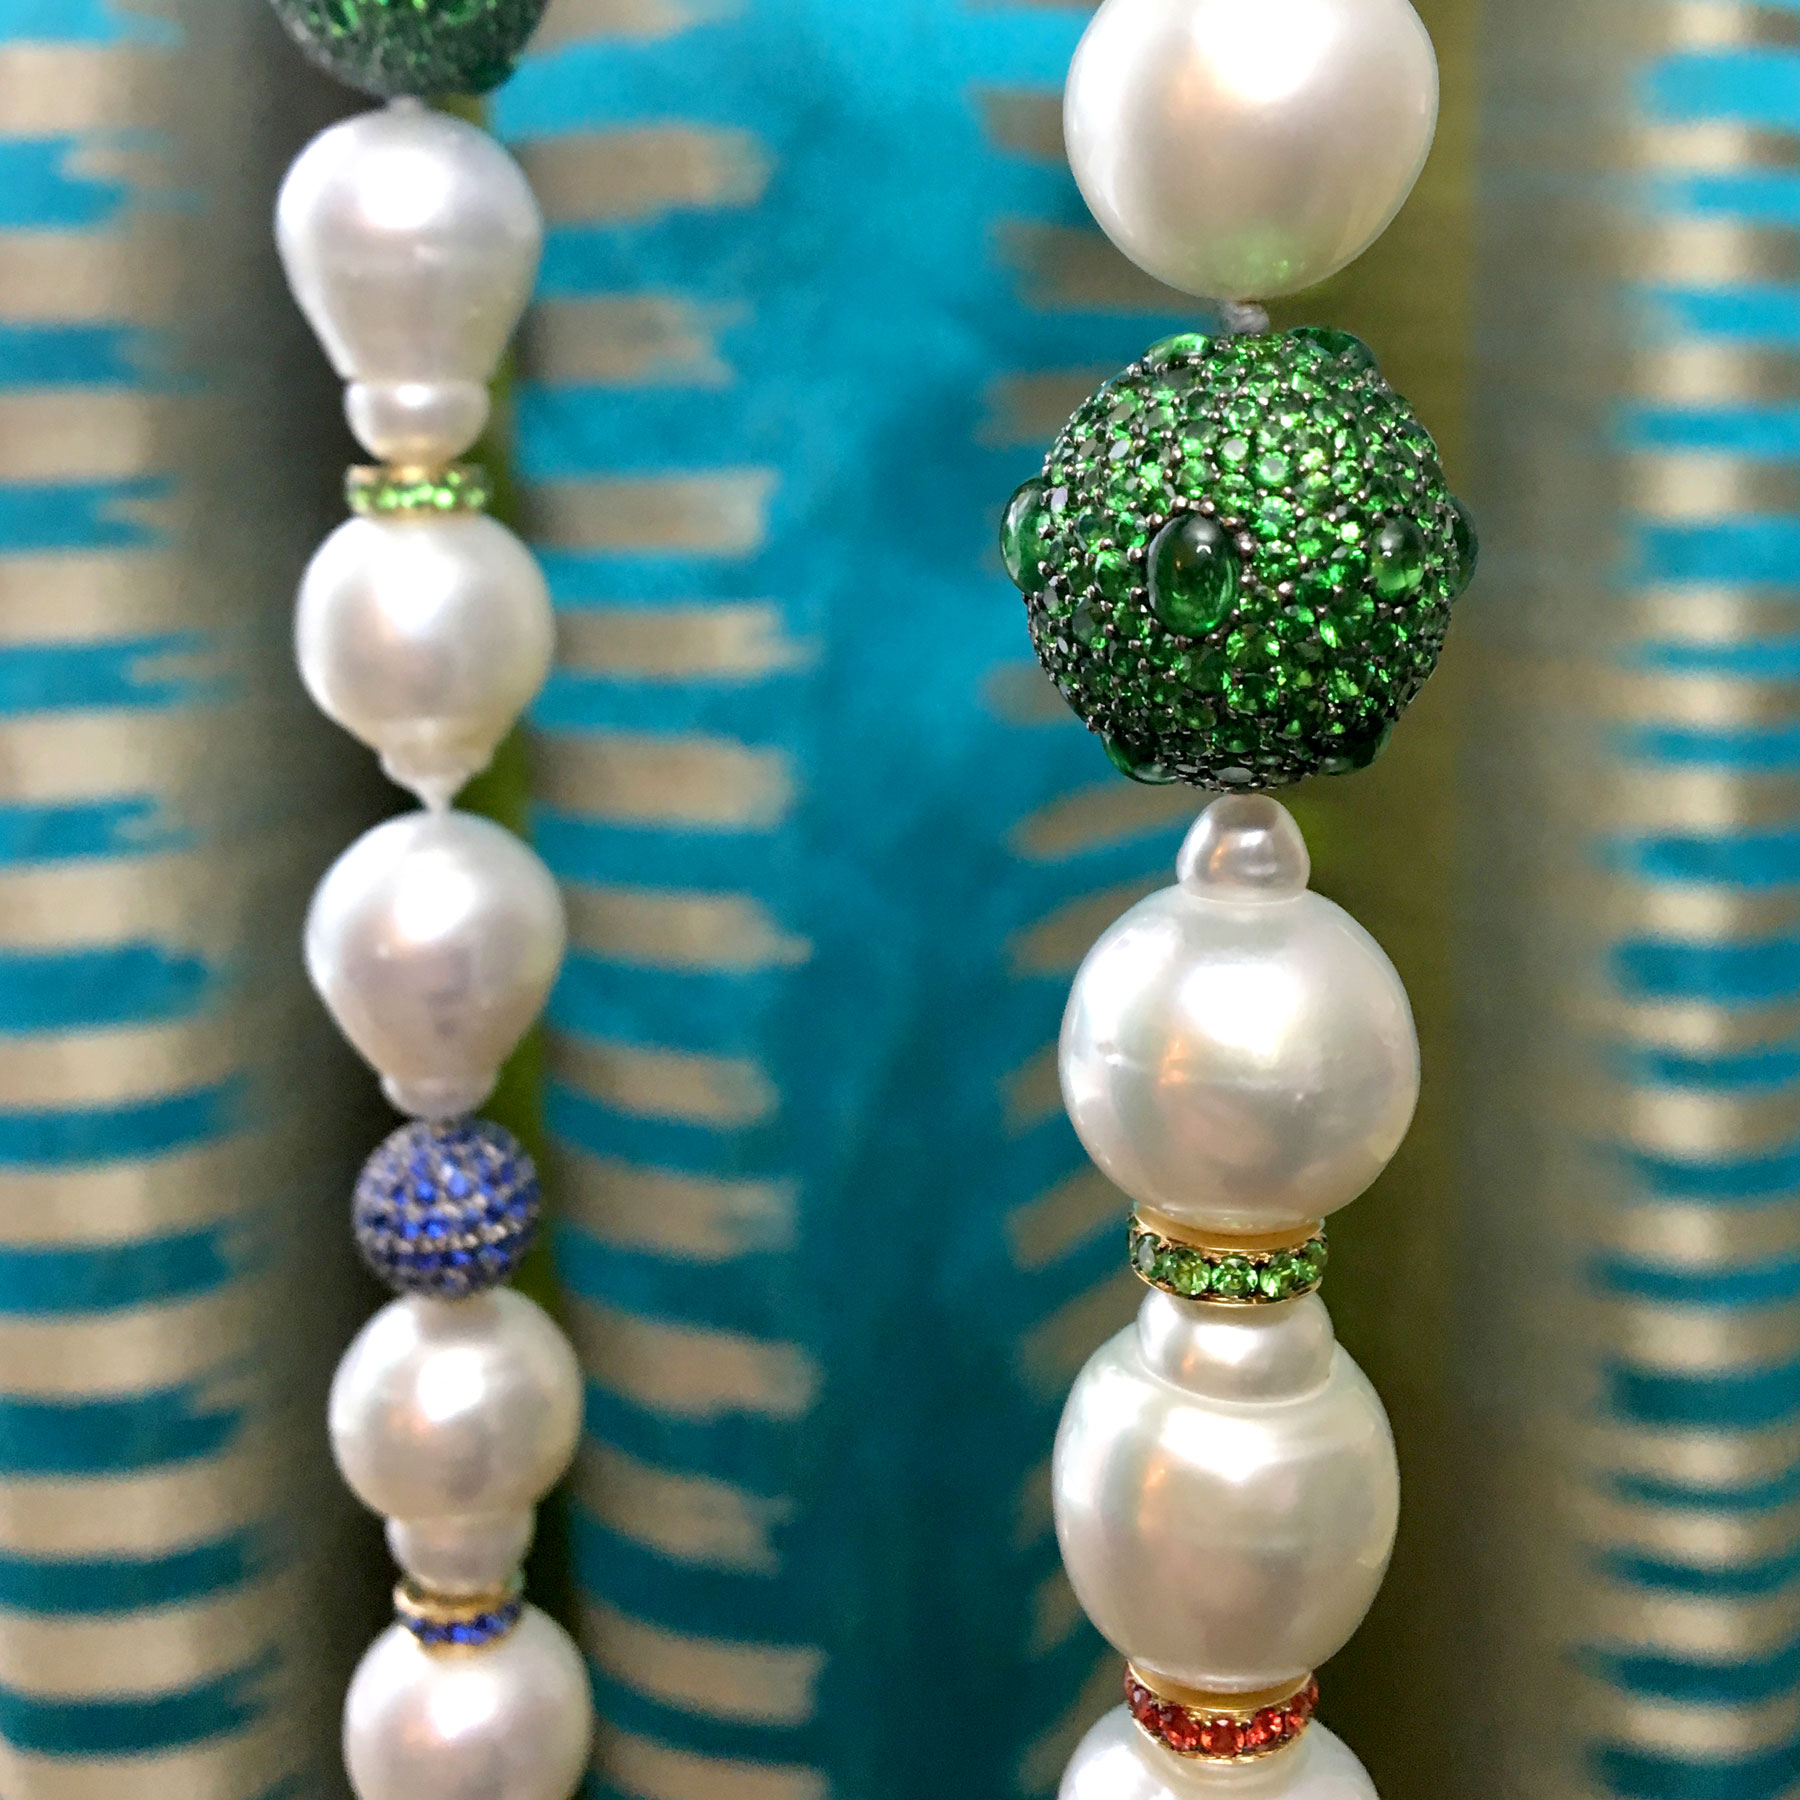 Margot McKinney’s bounty of baroque pearls